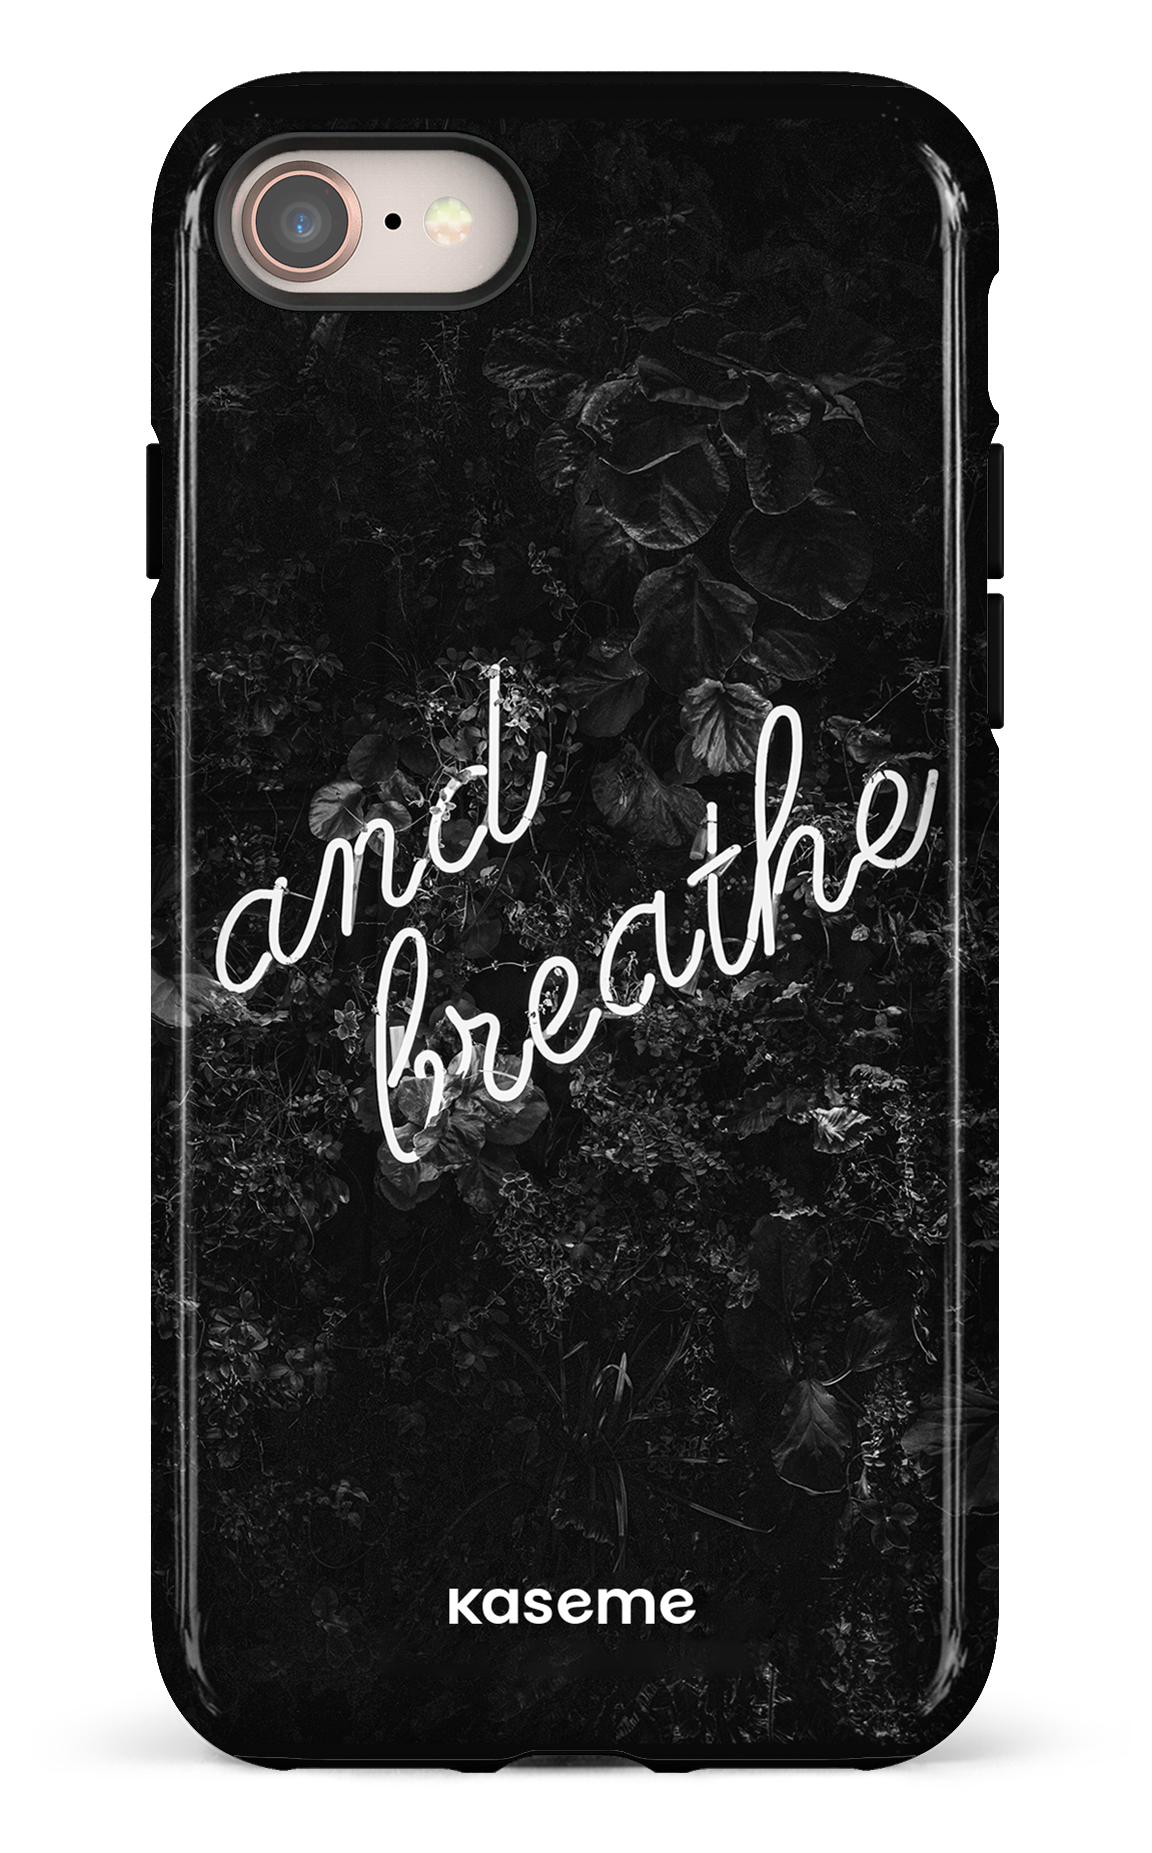 Exhale - iPhone 8